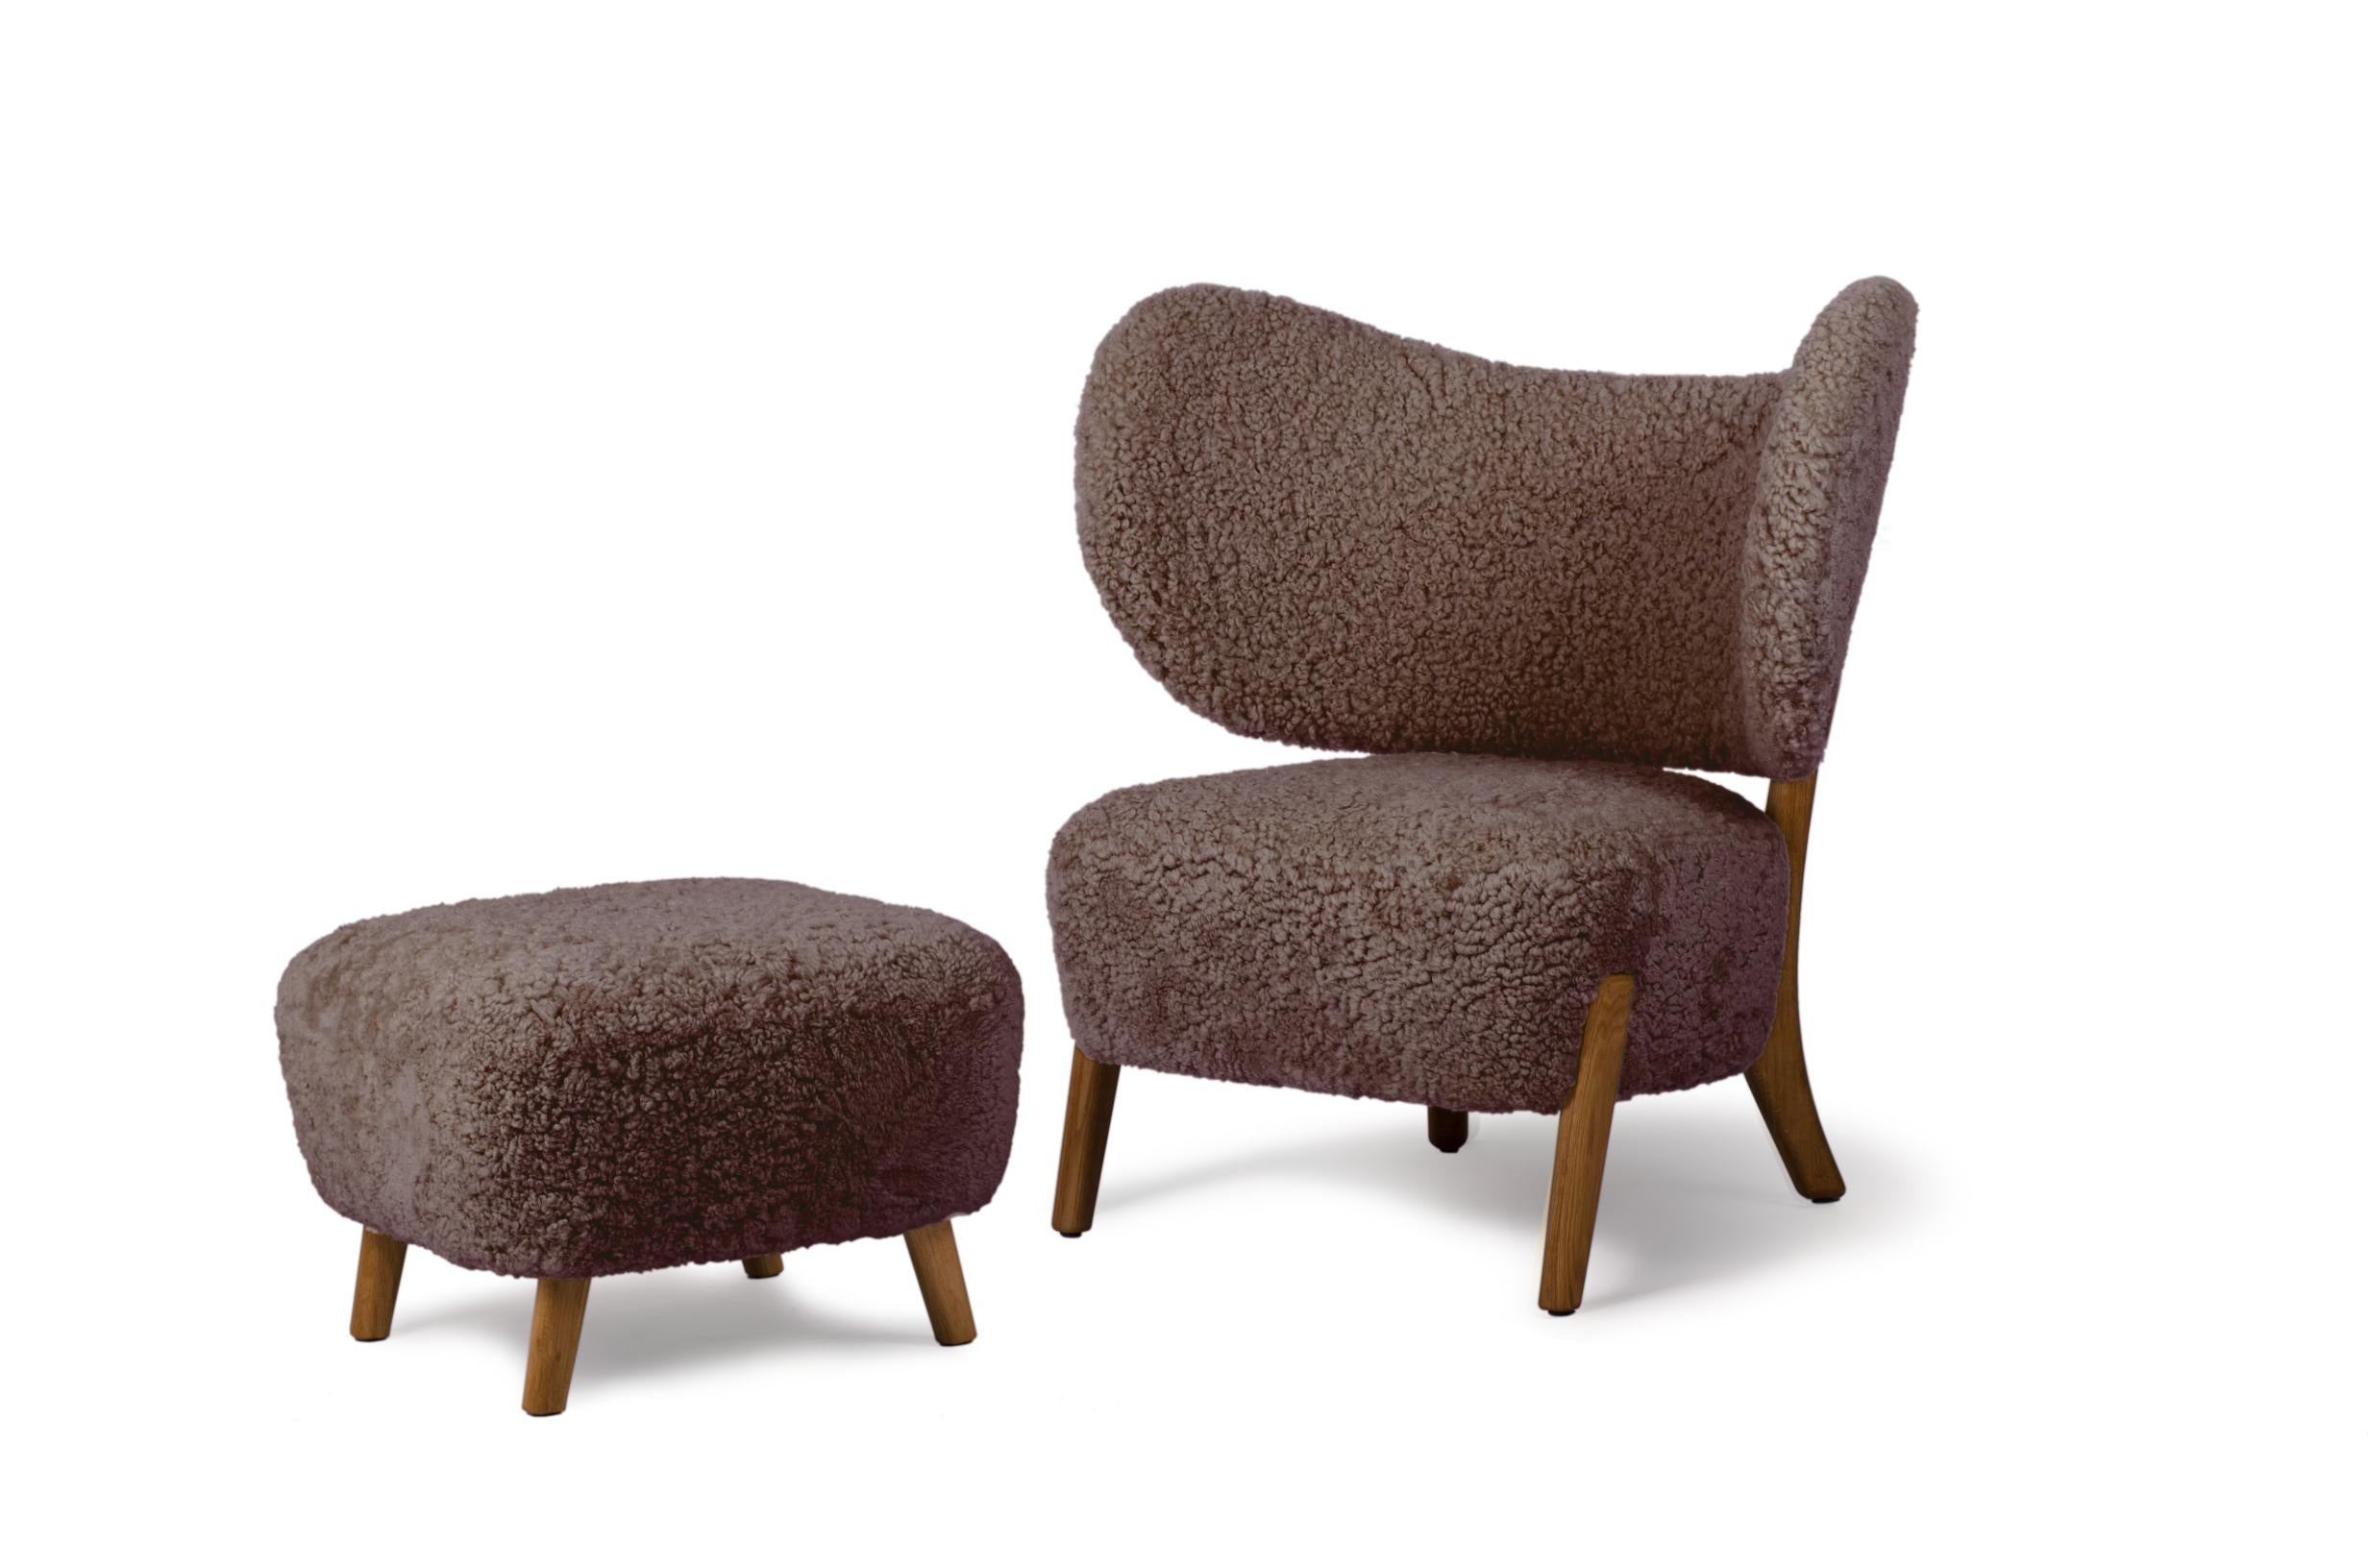 Moonlight Sheepskin Set Of TMBO Lounge Chair & Pouff by Mazo Design
Dimensions: W 90 x D 68.5 x H 87 cm / W 49 x D 49 x H 34 cm
Materials: Oak, Sheepskin
Also Available: ROMO/Linara, DAW/Royal, KVADRAT/Remix, KVADRAT/Hallingdal & Fiord,